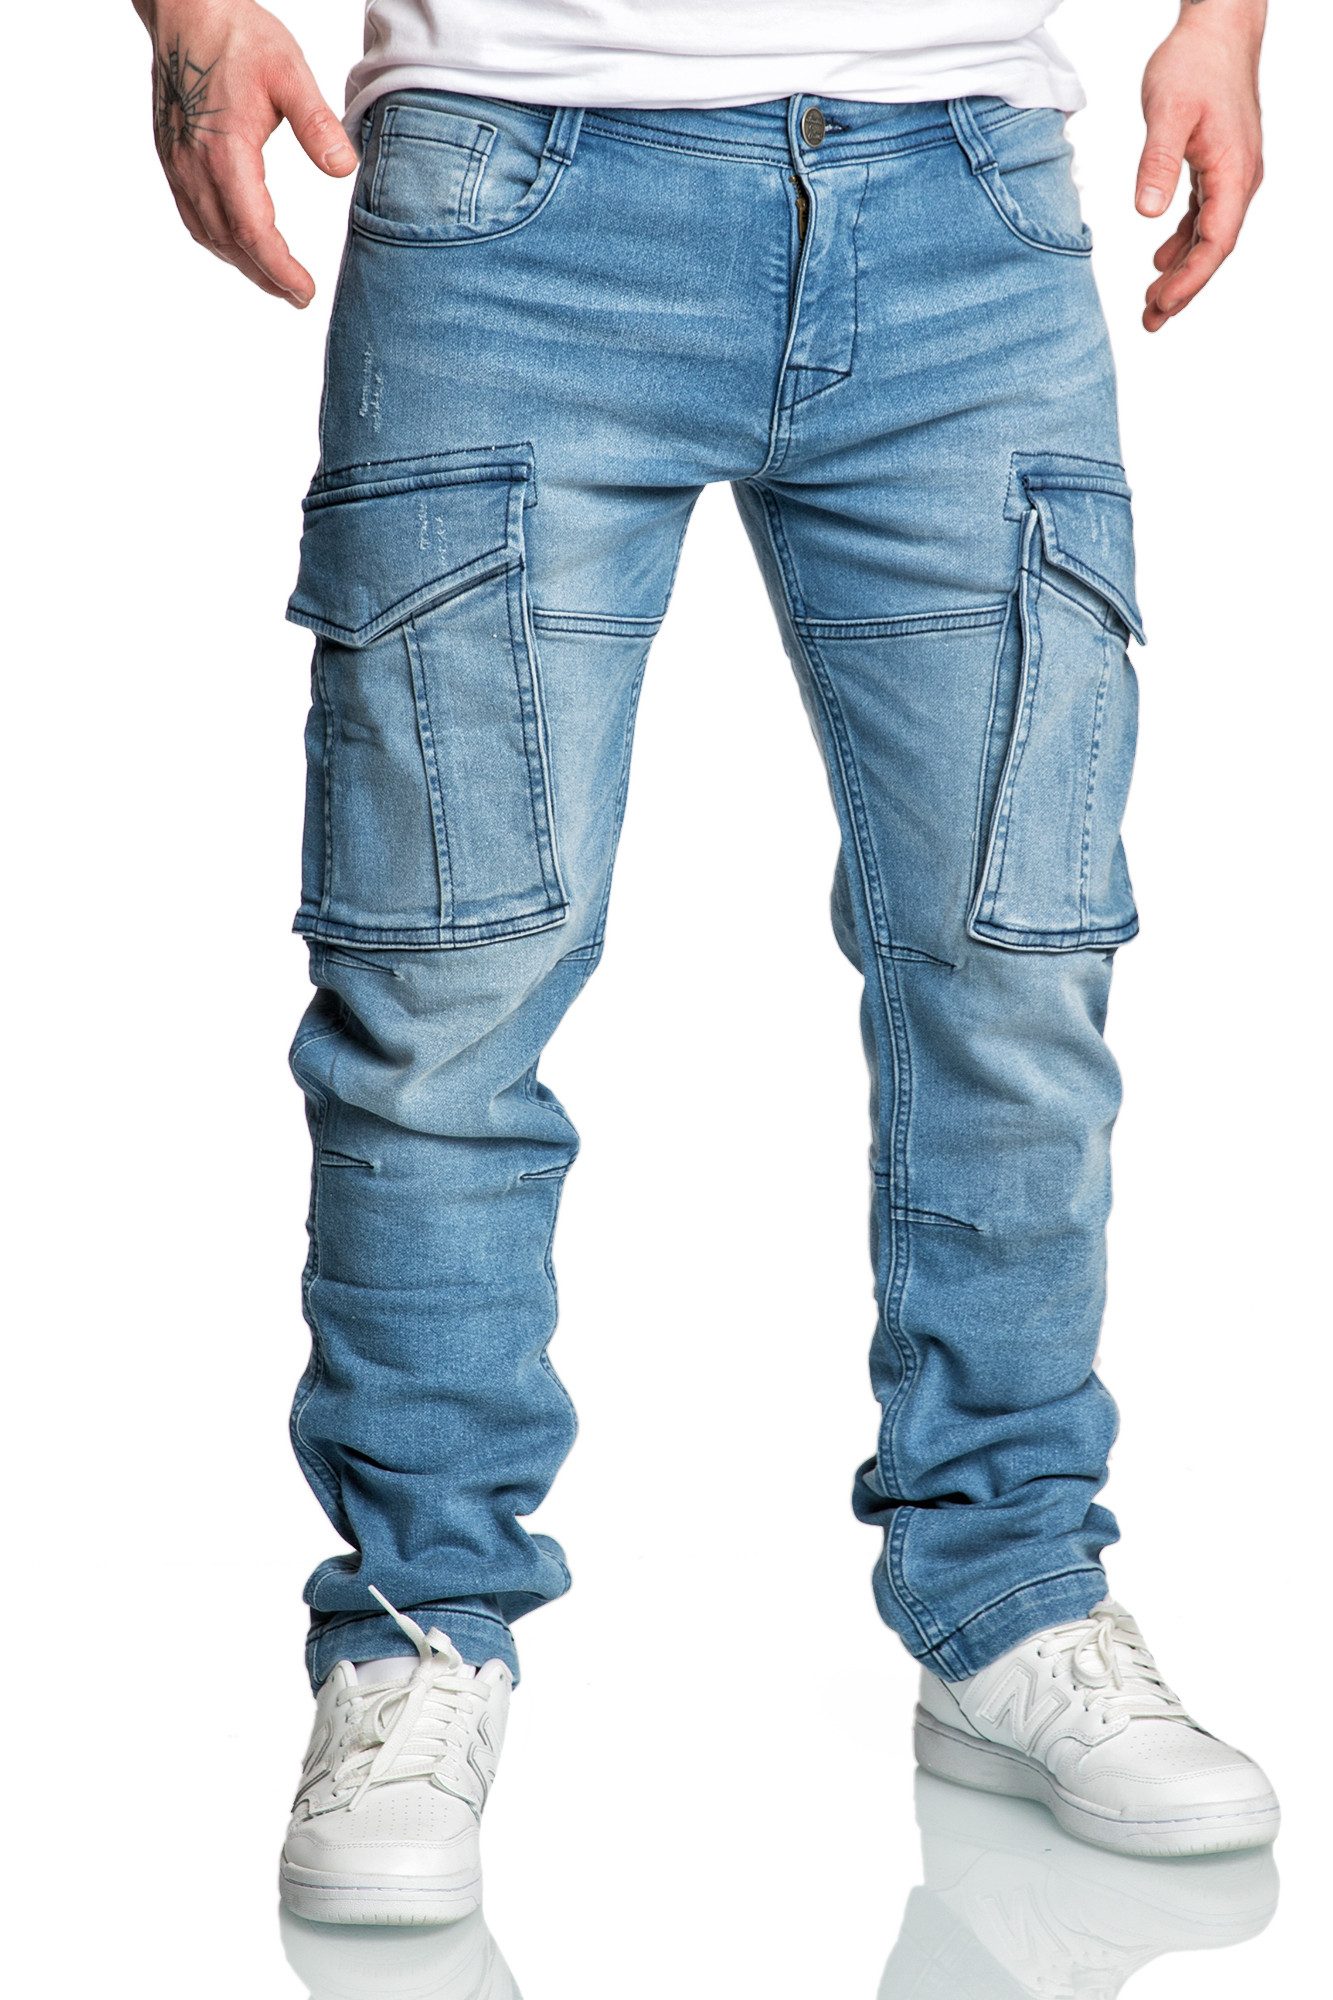 Amaci&Sons Cargojeans LINNDALE Sweathose im Denim Look Herren Sweathose in Stretch Denim Jeans